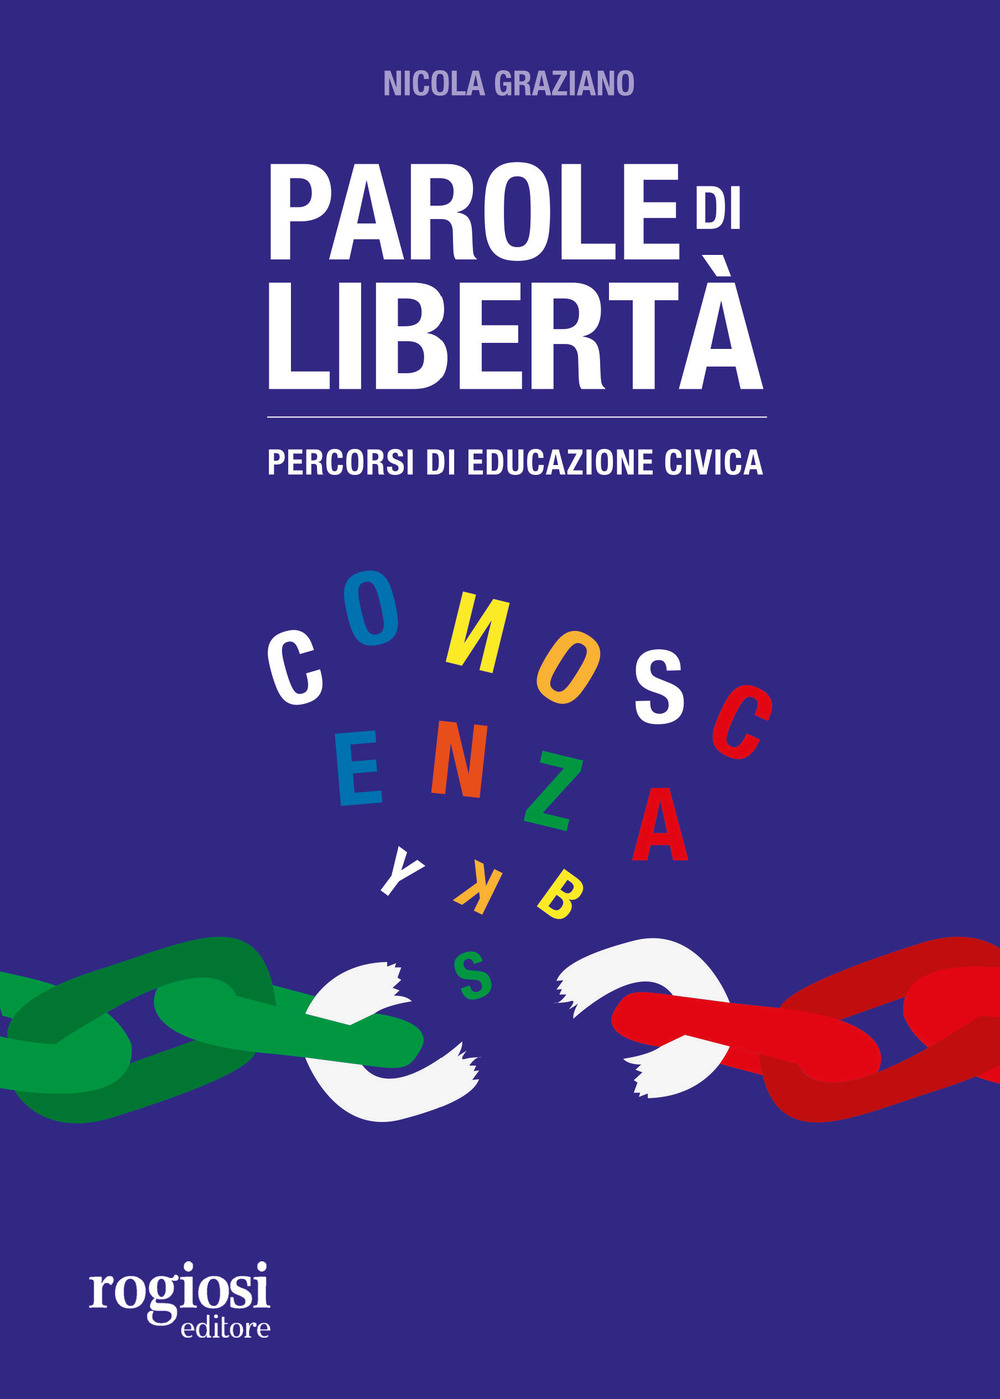 Image of Parole di libertà. Percorsi di educazione civica